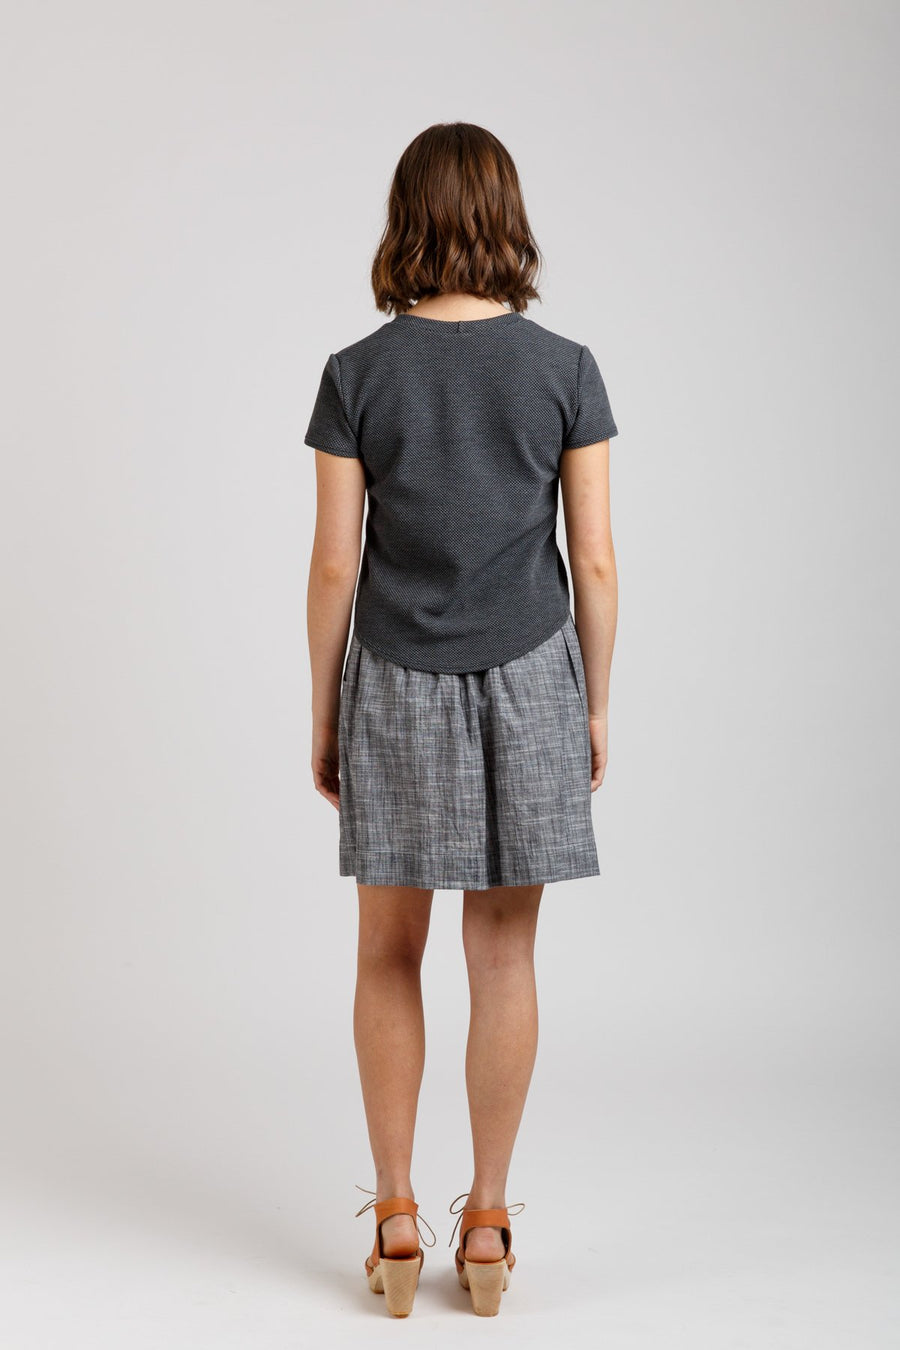 Briar sweater and t-shirt pattern- Megan Nielsen